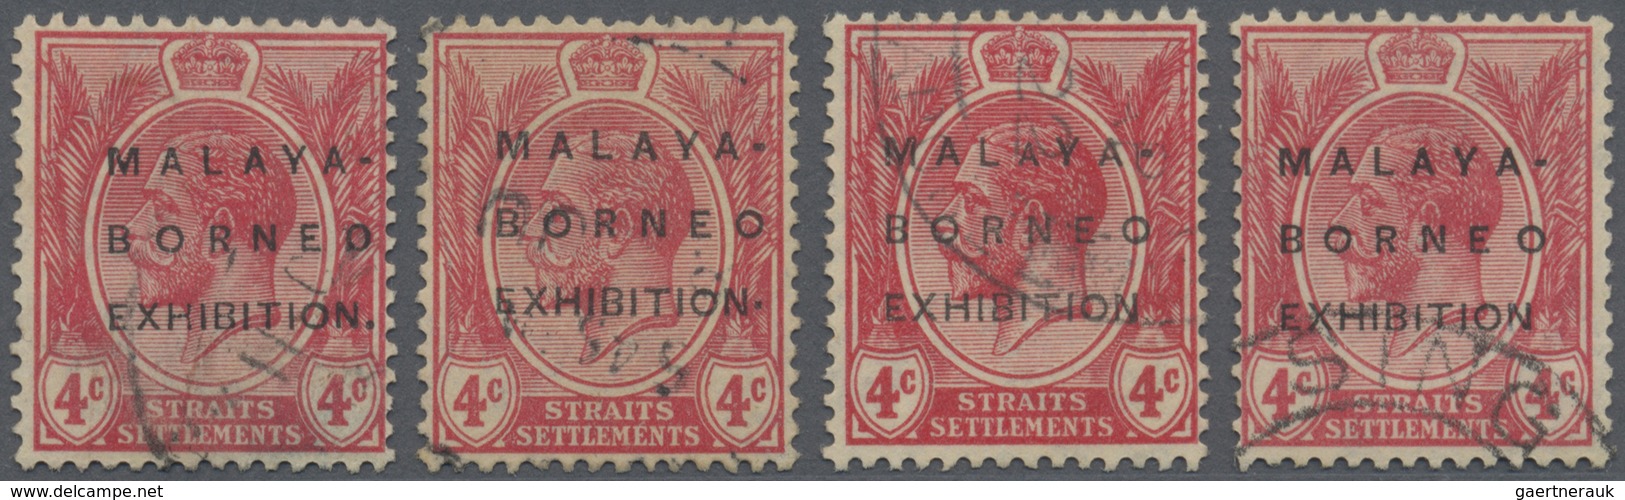 O Malaiische Staaten - Straits Settlements: 1922, Malaya-Borneo Exhibition 4c. Red Wmk. Mult. Script C - Straits Settlements